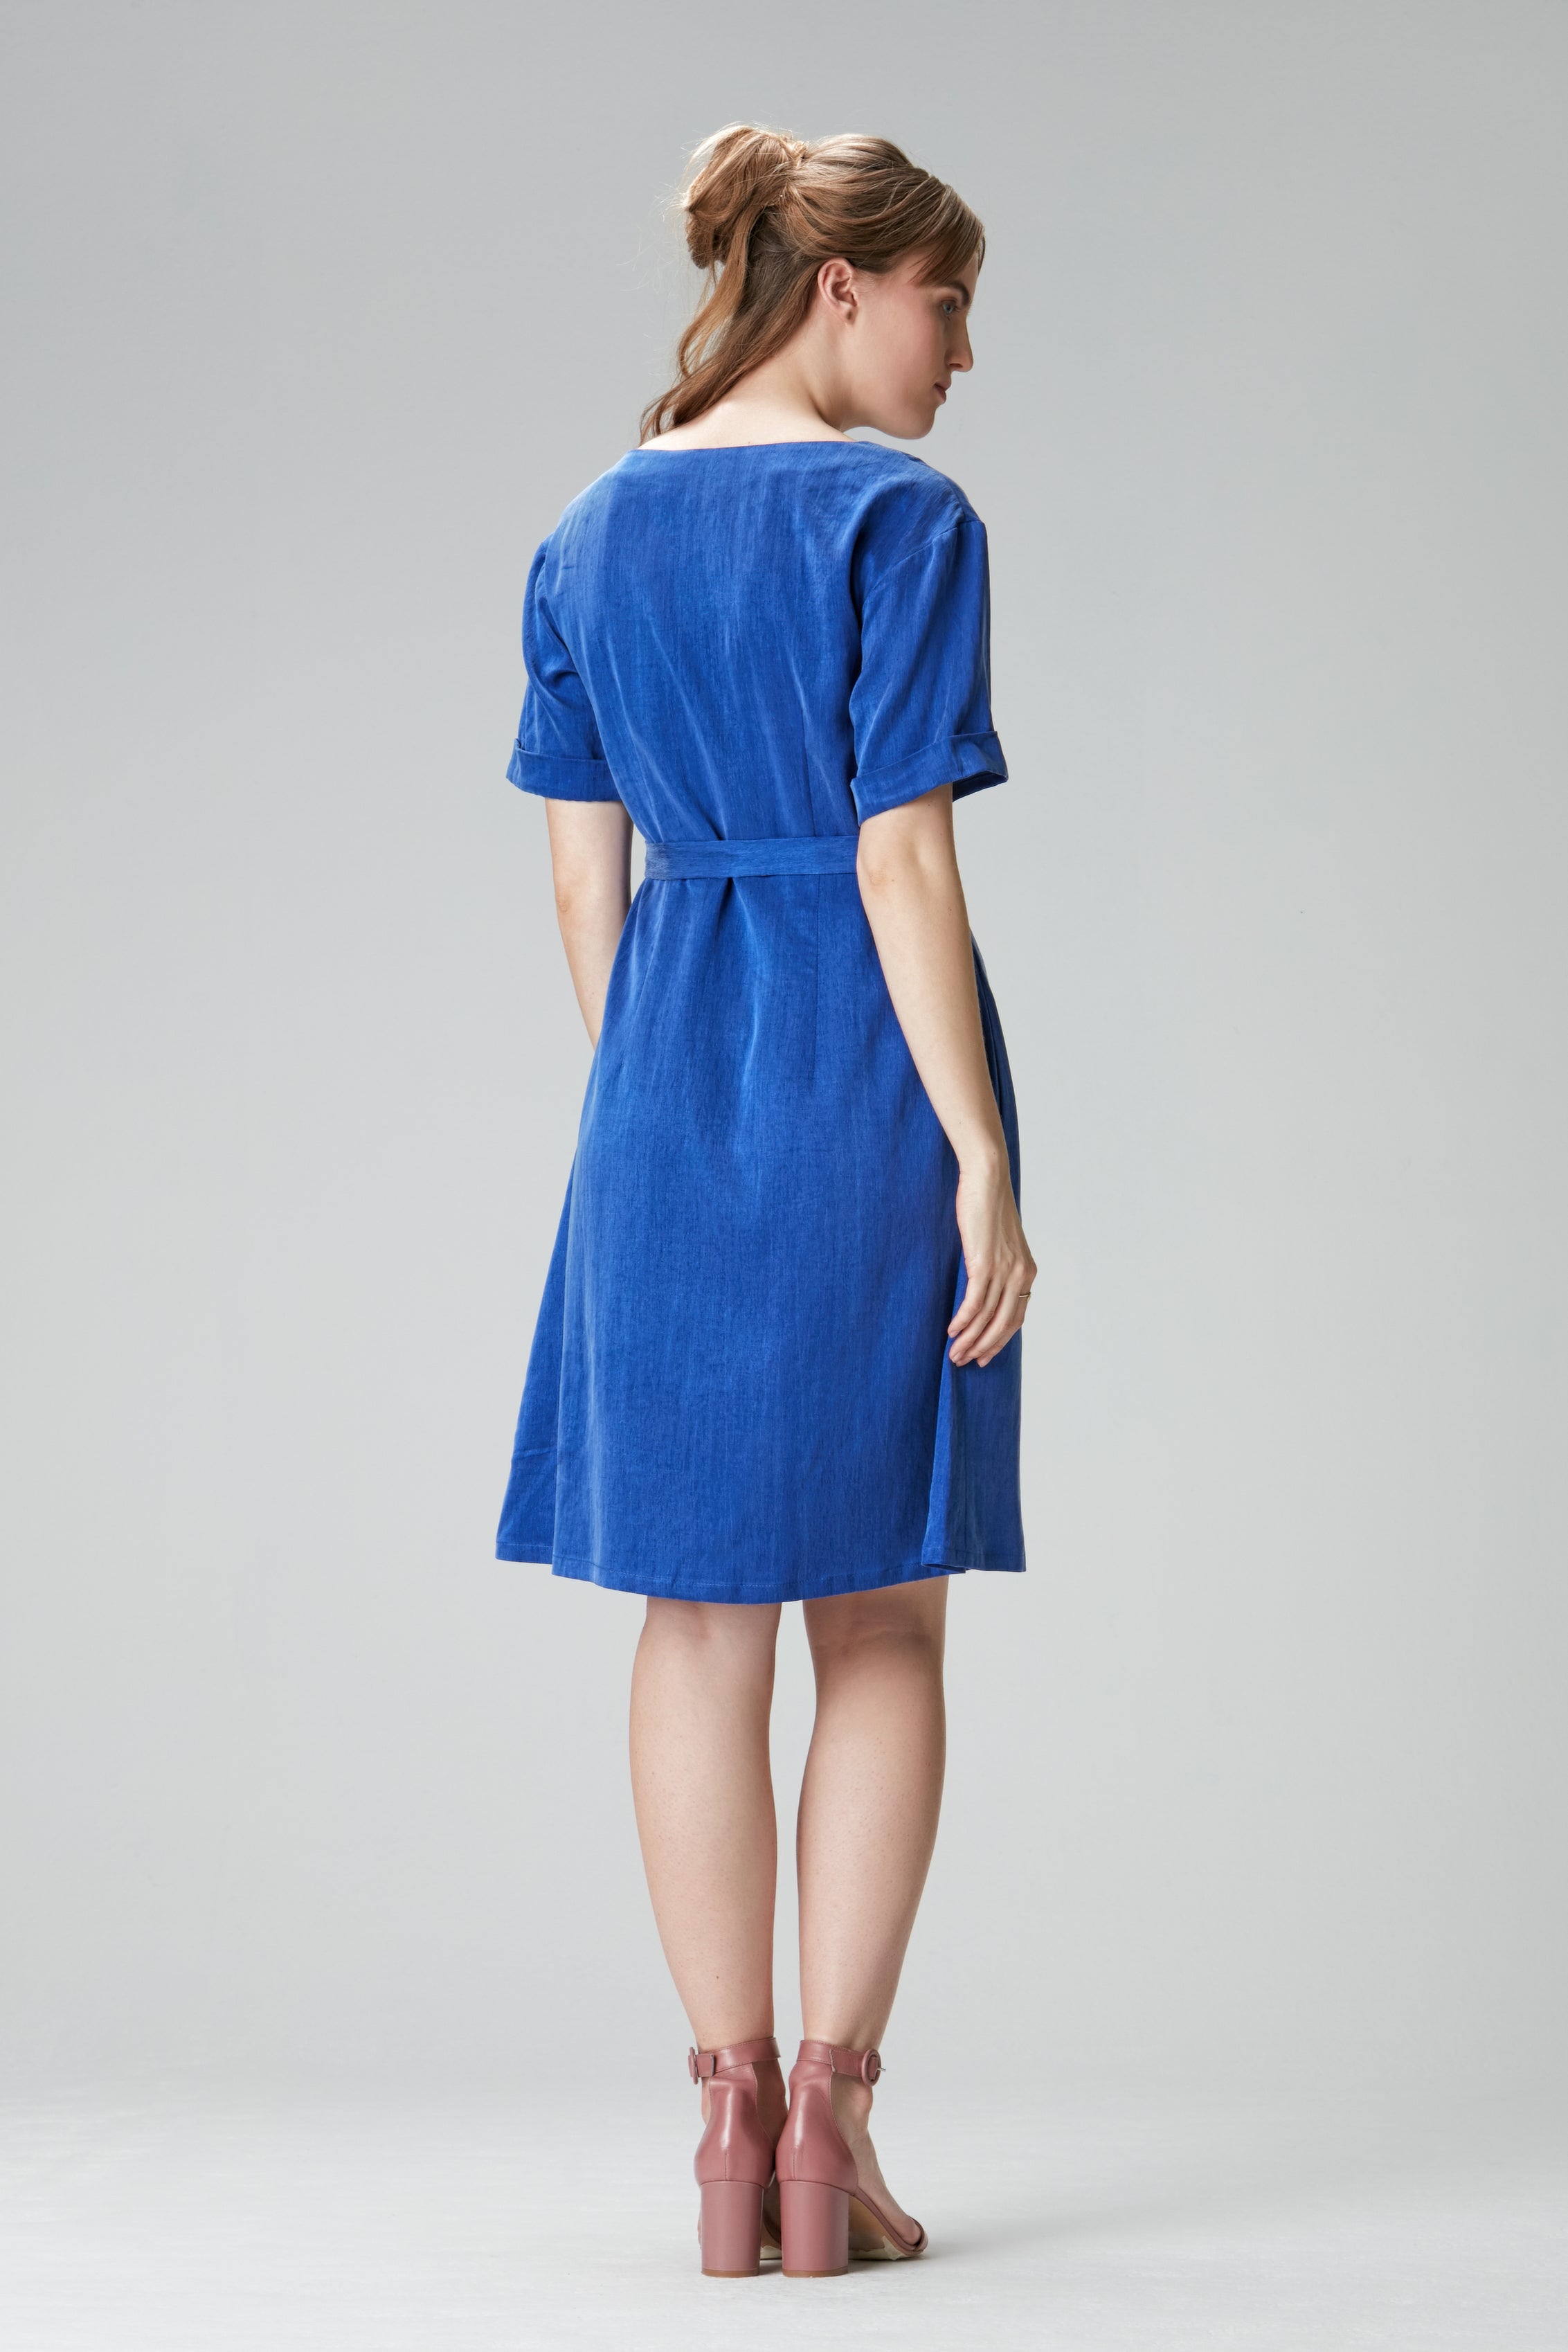 Blue summer dress with sleeves "MI-LAA" made of Bemberg Cupro